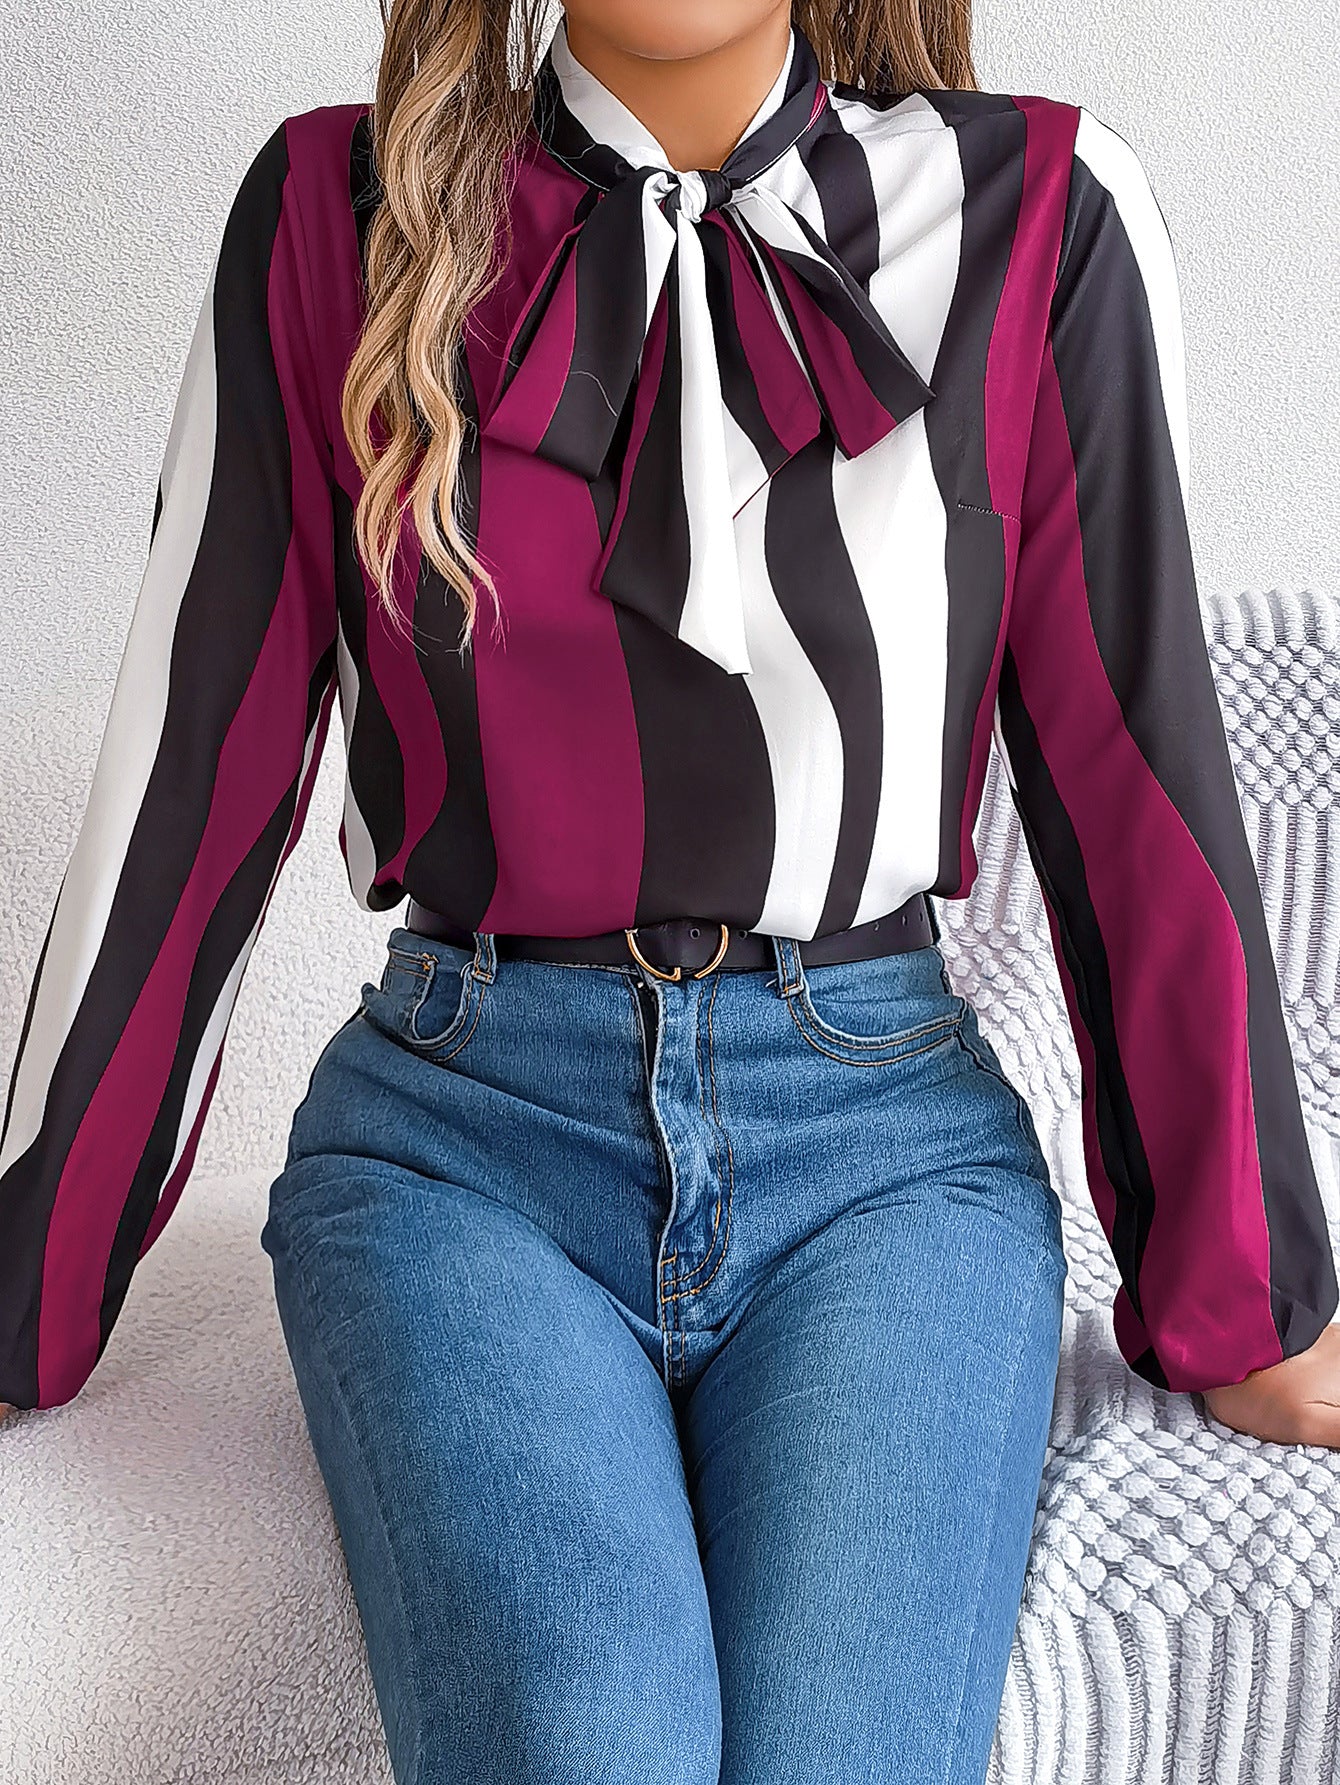 FZ Women's Elegant Contrast Color Striped Lace up Work Shirt Top - FZwear